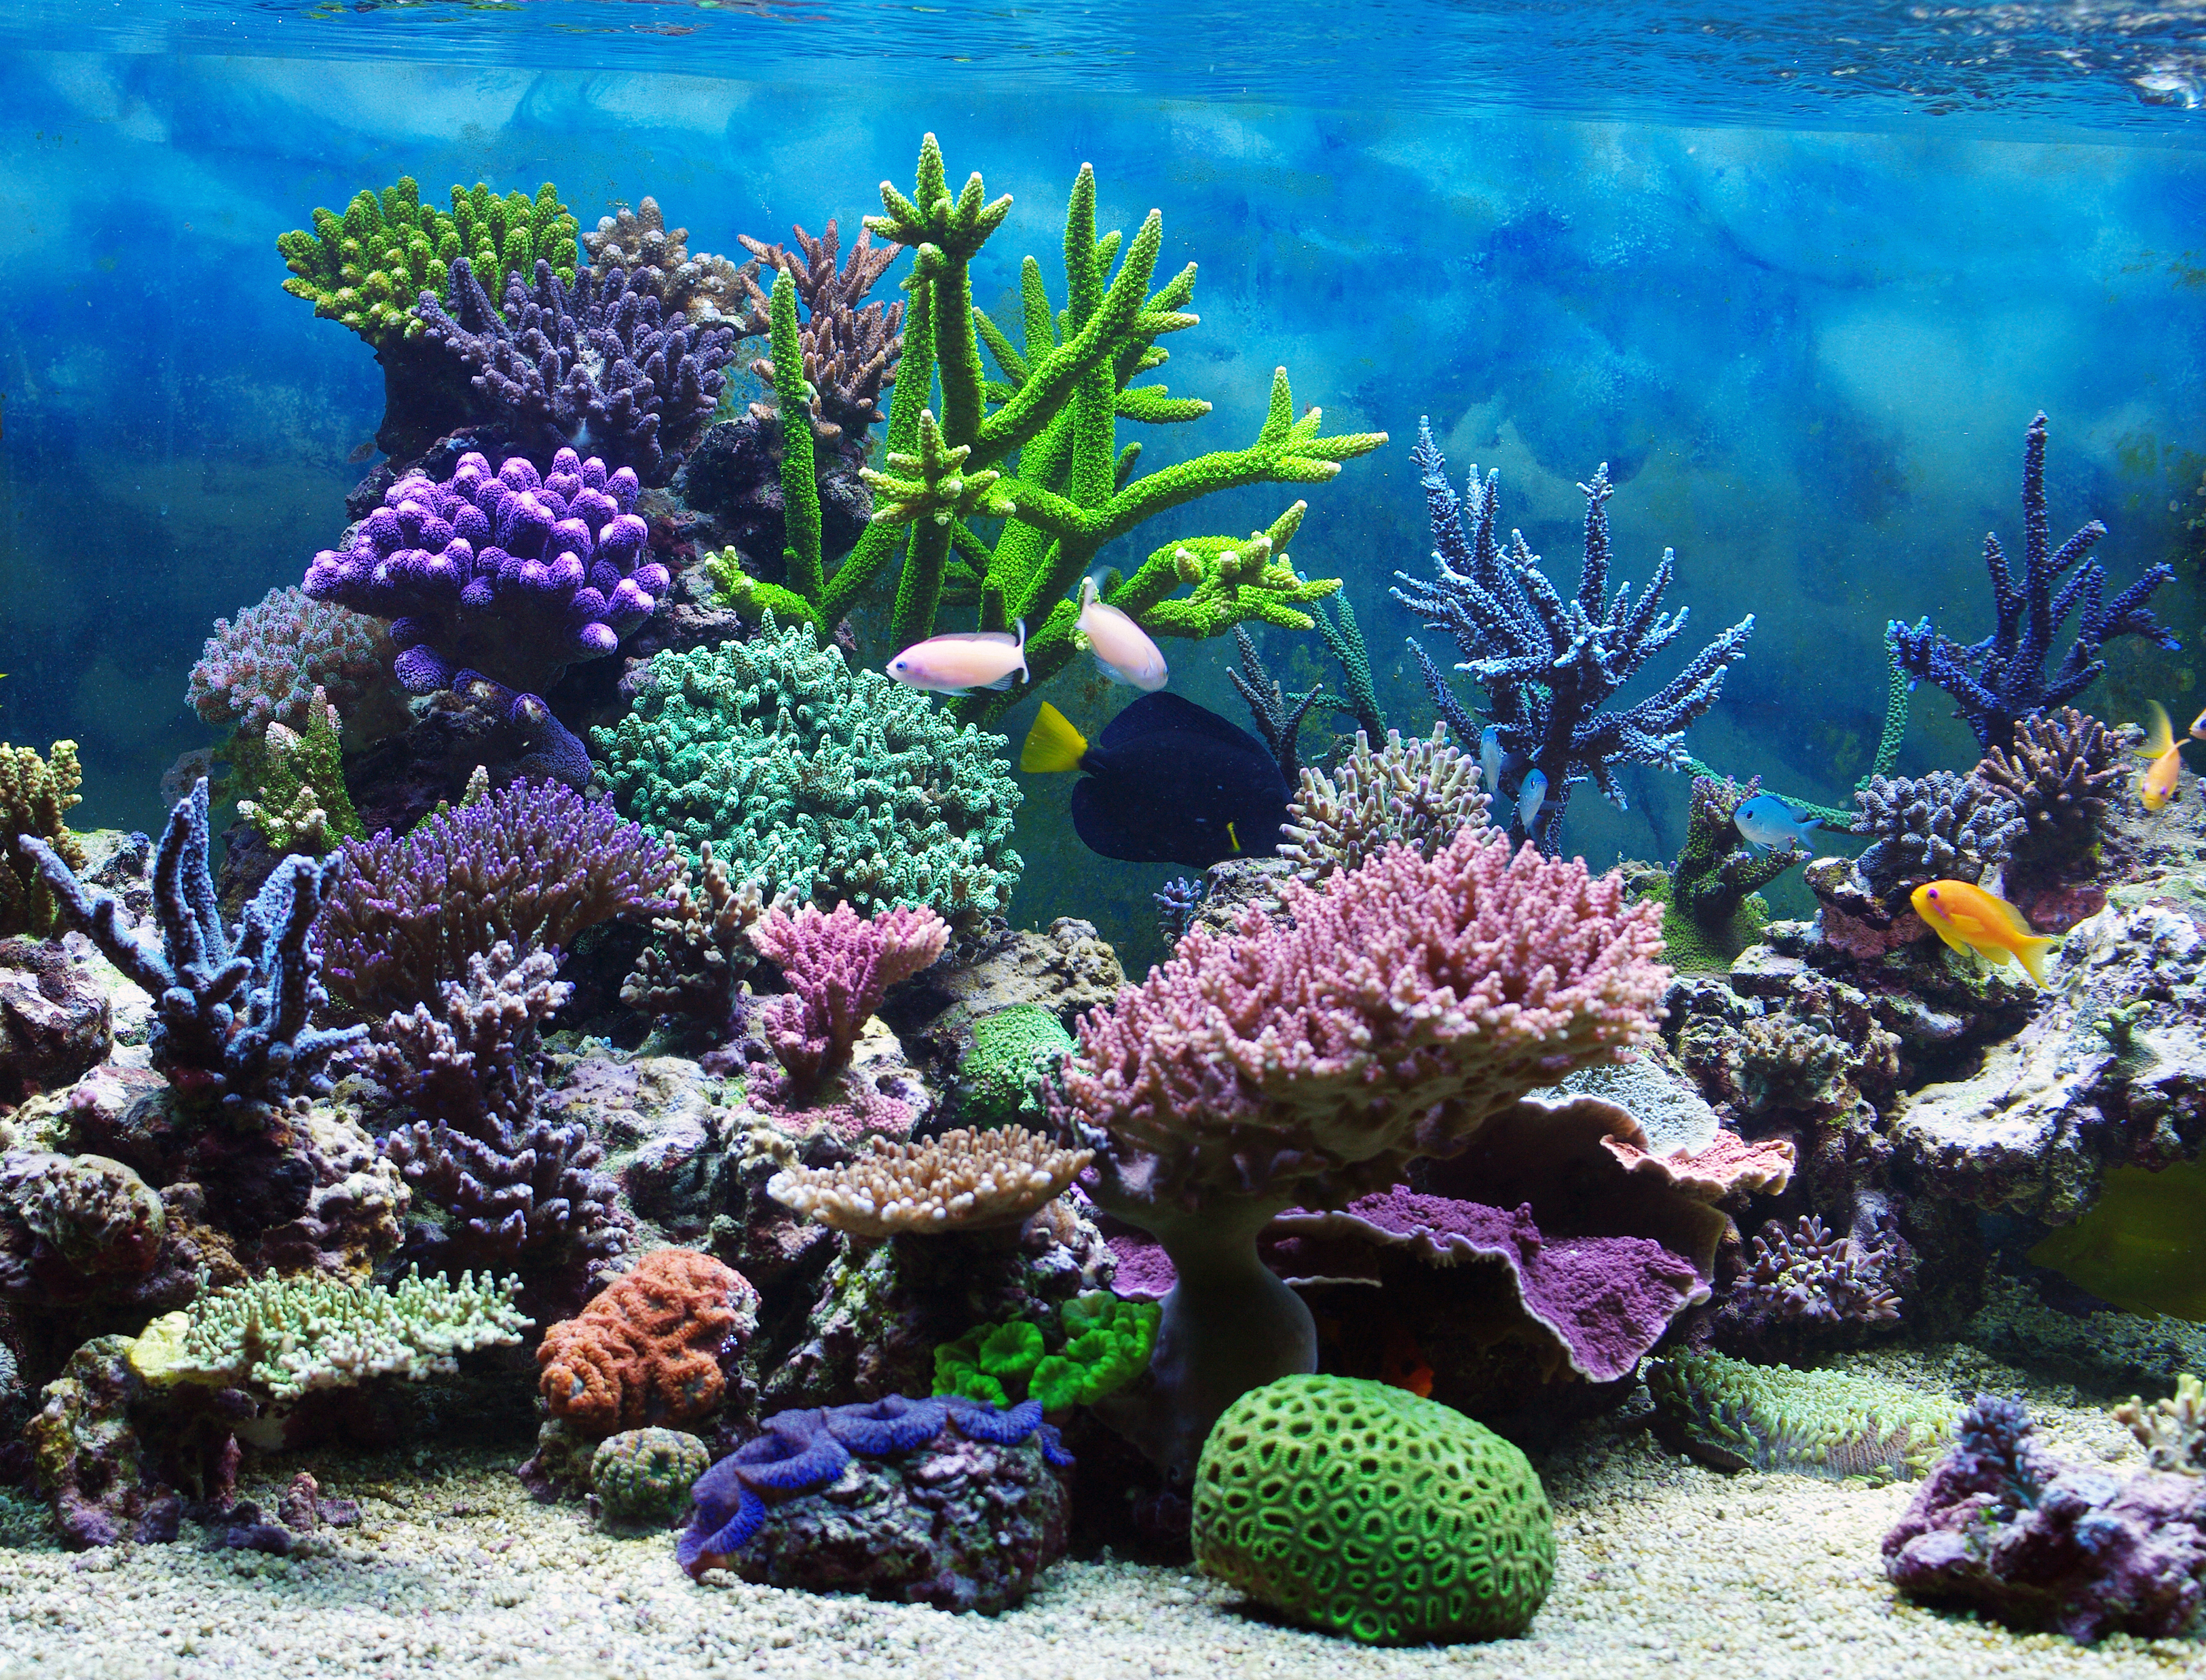 Кралы. Коралловый риф кораллы. Подводный мир океана коралловый риф. Морской аквариум коралловый риф. Атлантический океан коралловый риф.